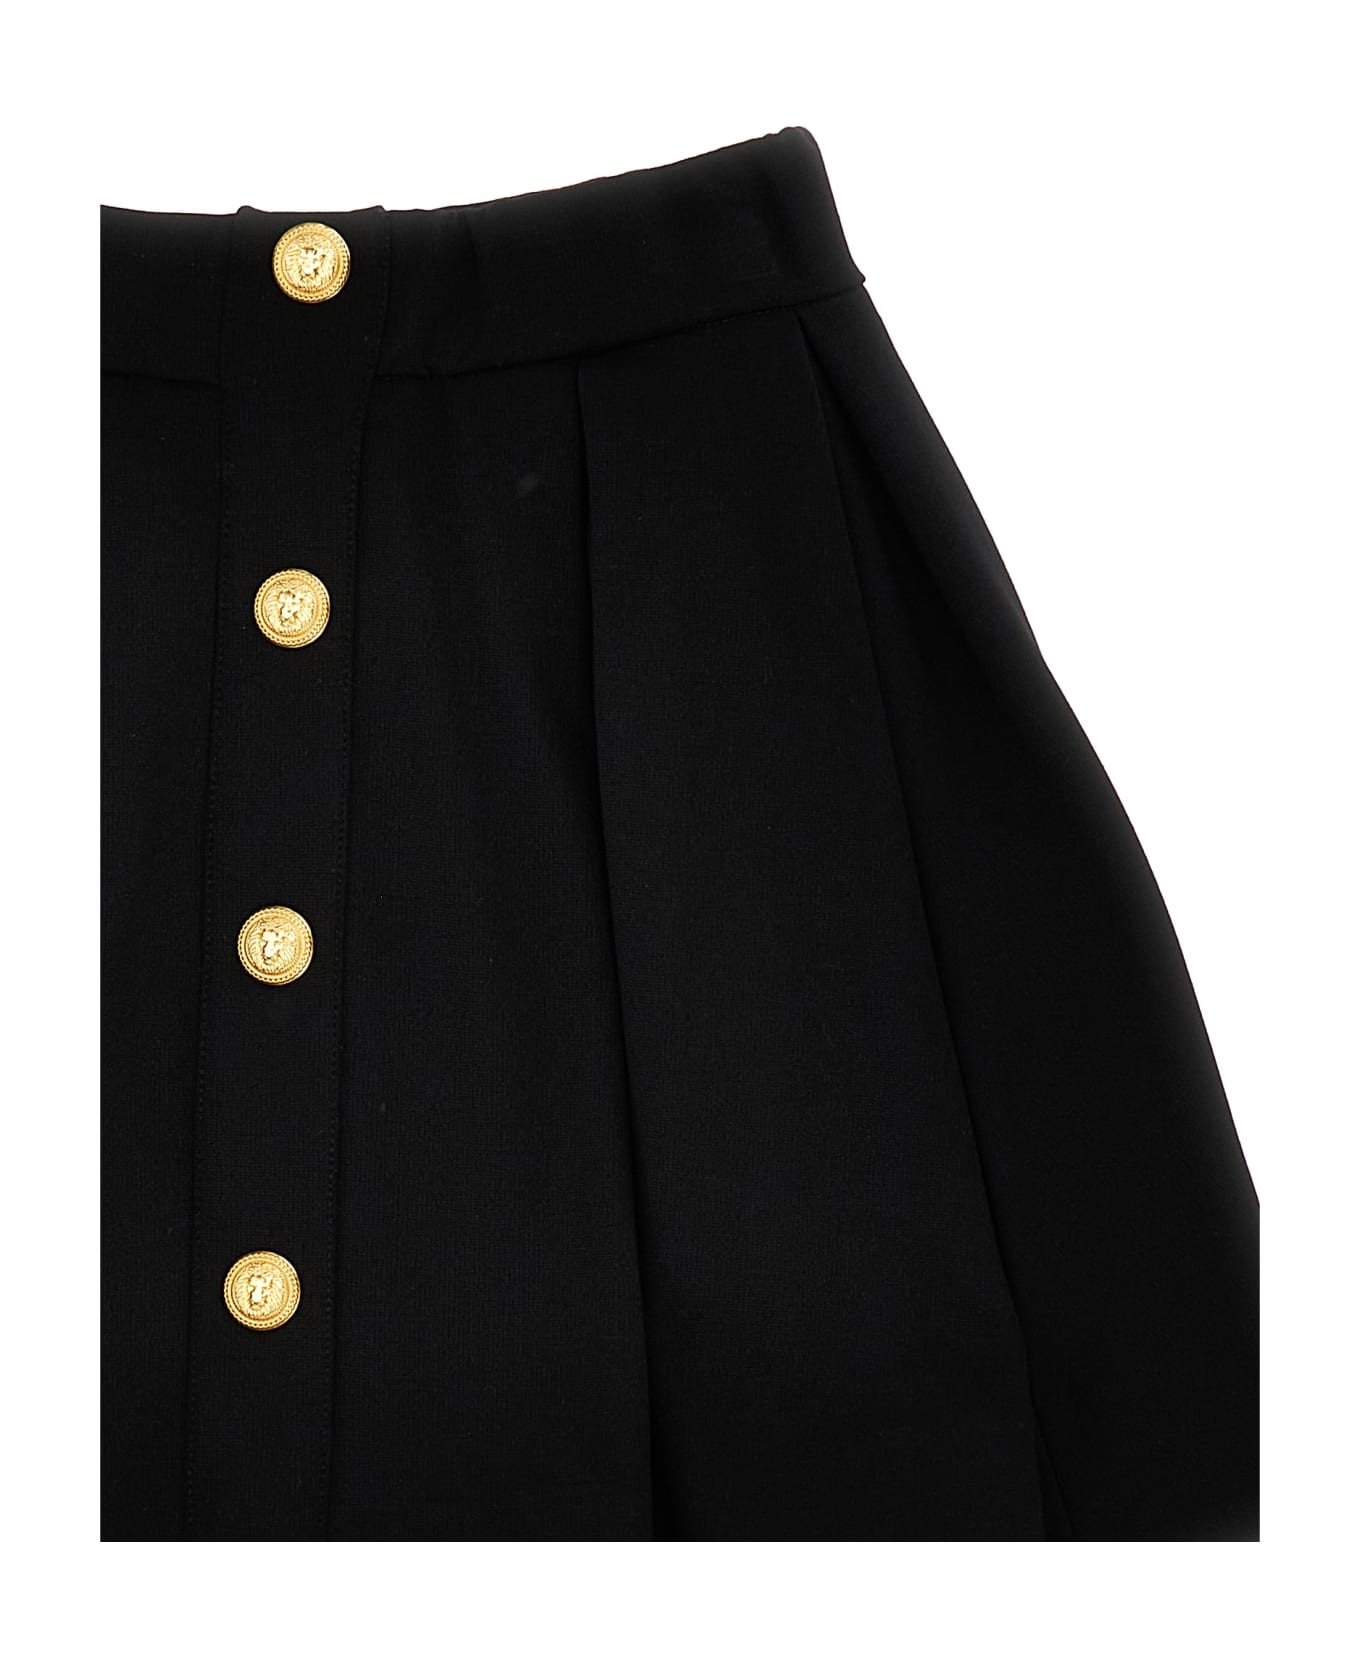 Balmain Logo Button Skirt - Nero ボトムス